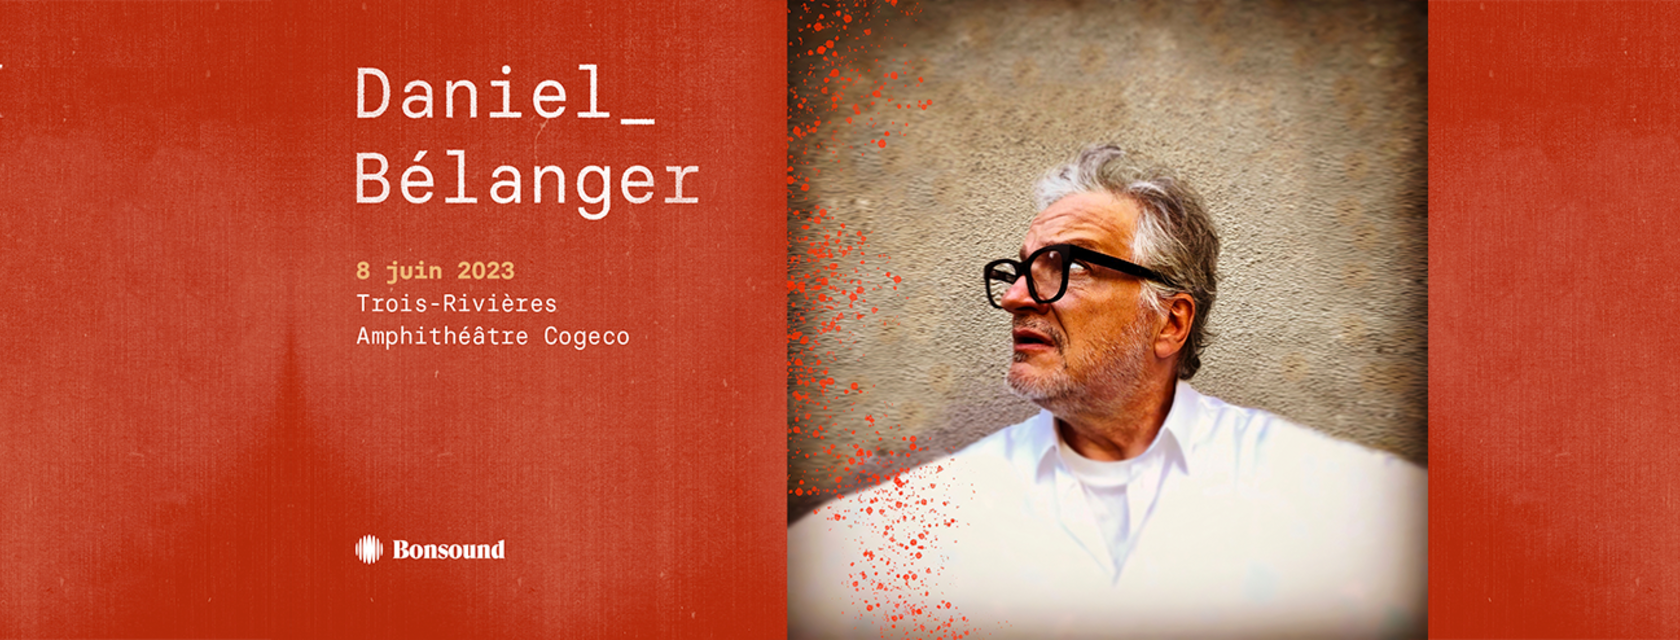 Daniel Bélanger will stop his tour at the Amphitheatre Cogeco this summer